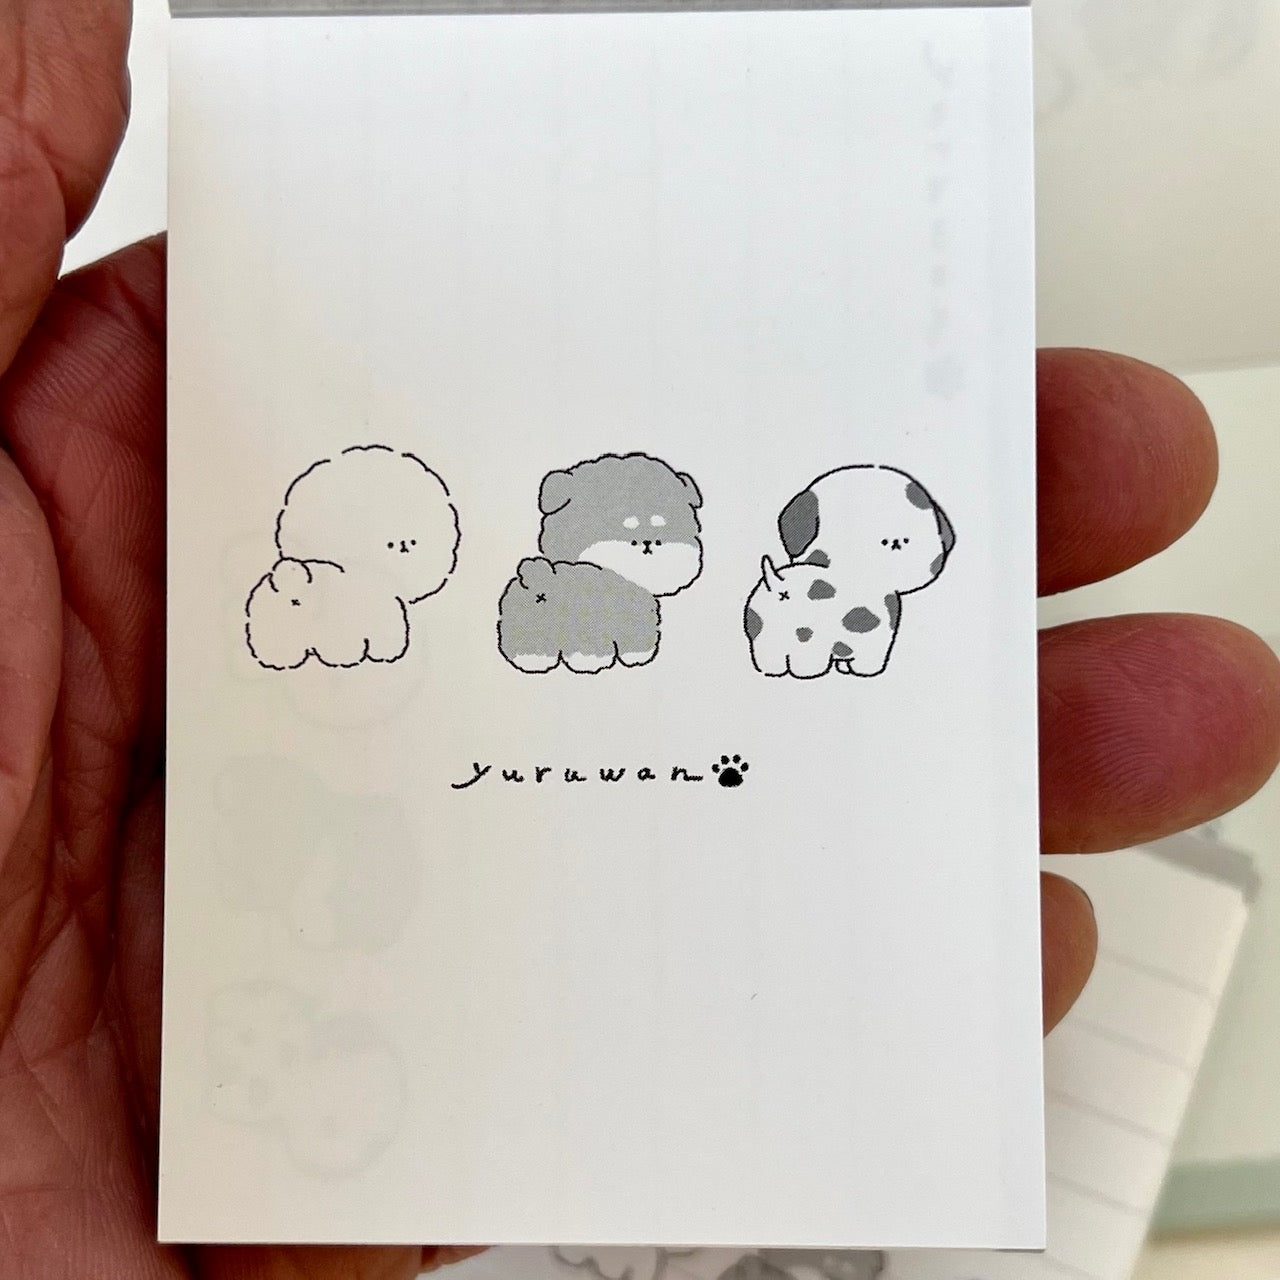 208154 Puppy Yuruwan Mini Notepad-10